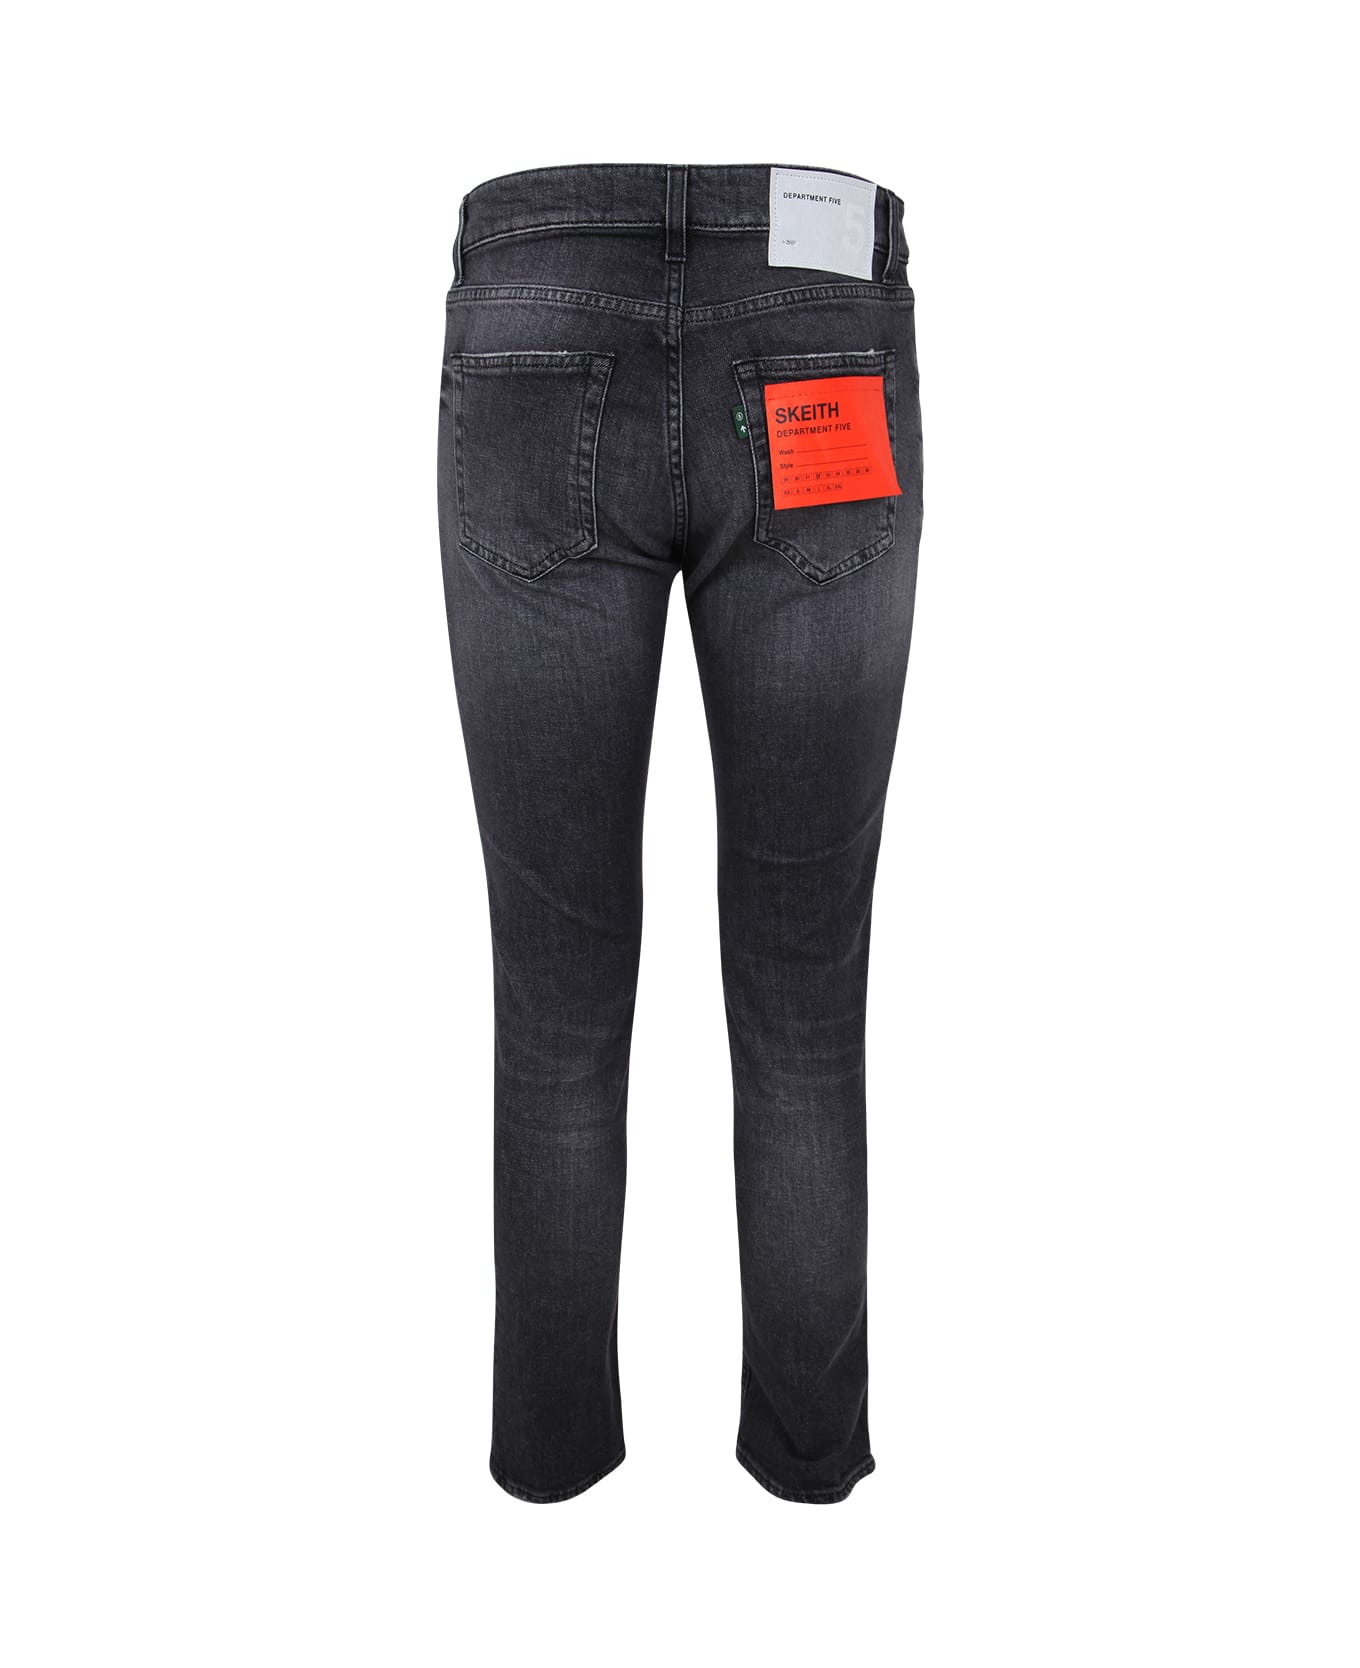 Department Five Skeith Skinny Jeans - Black